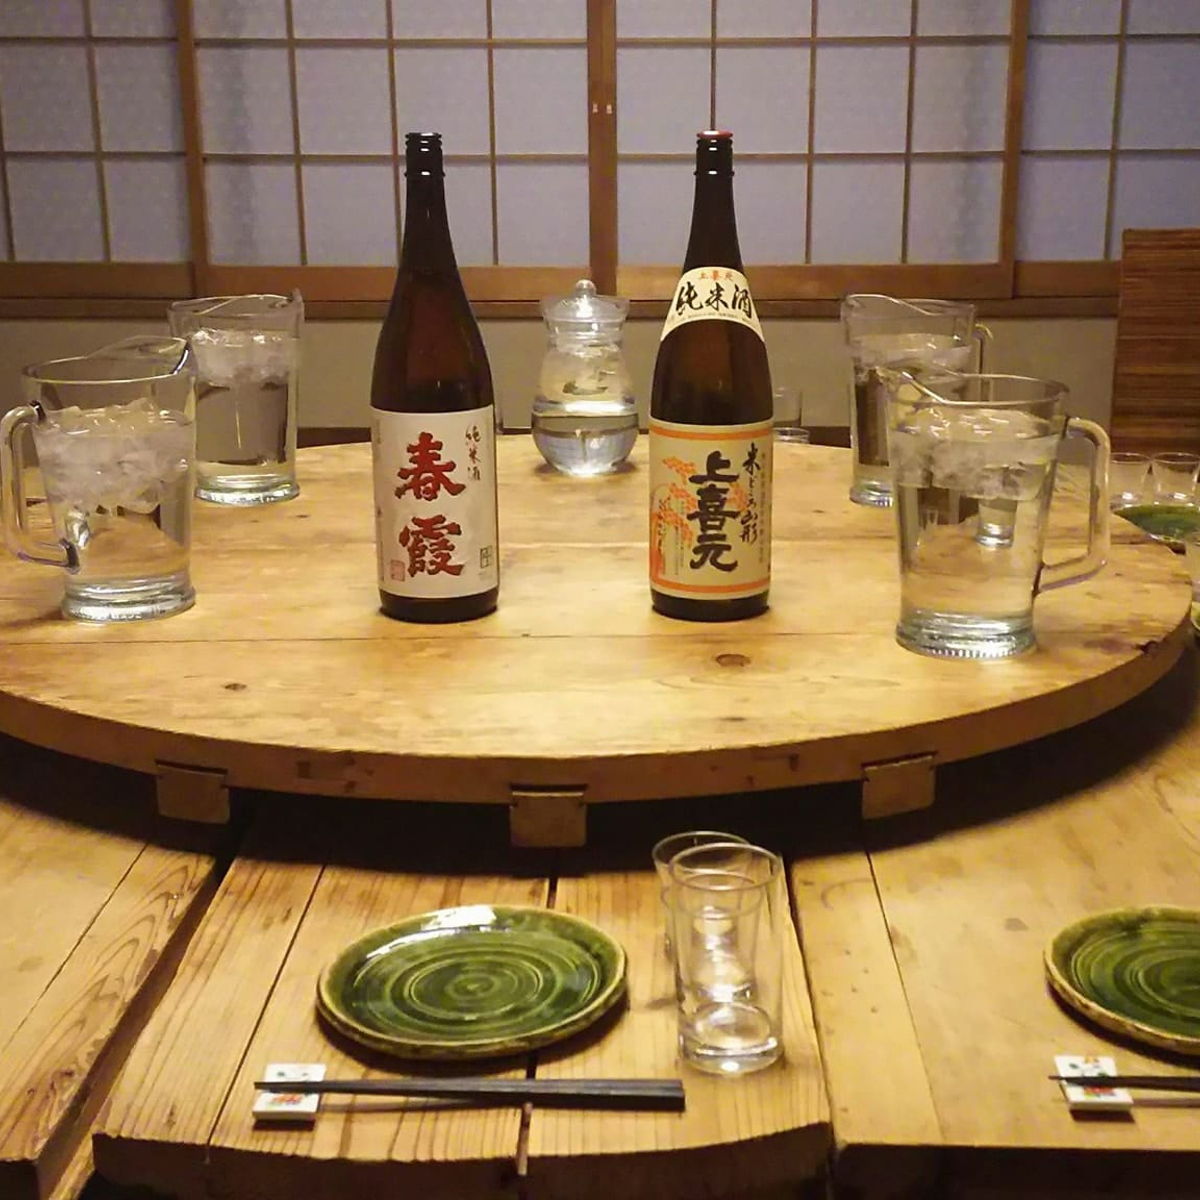 Sake and homemade dishes